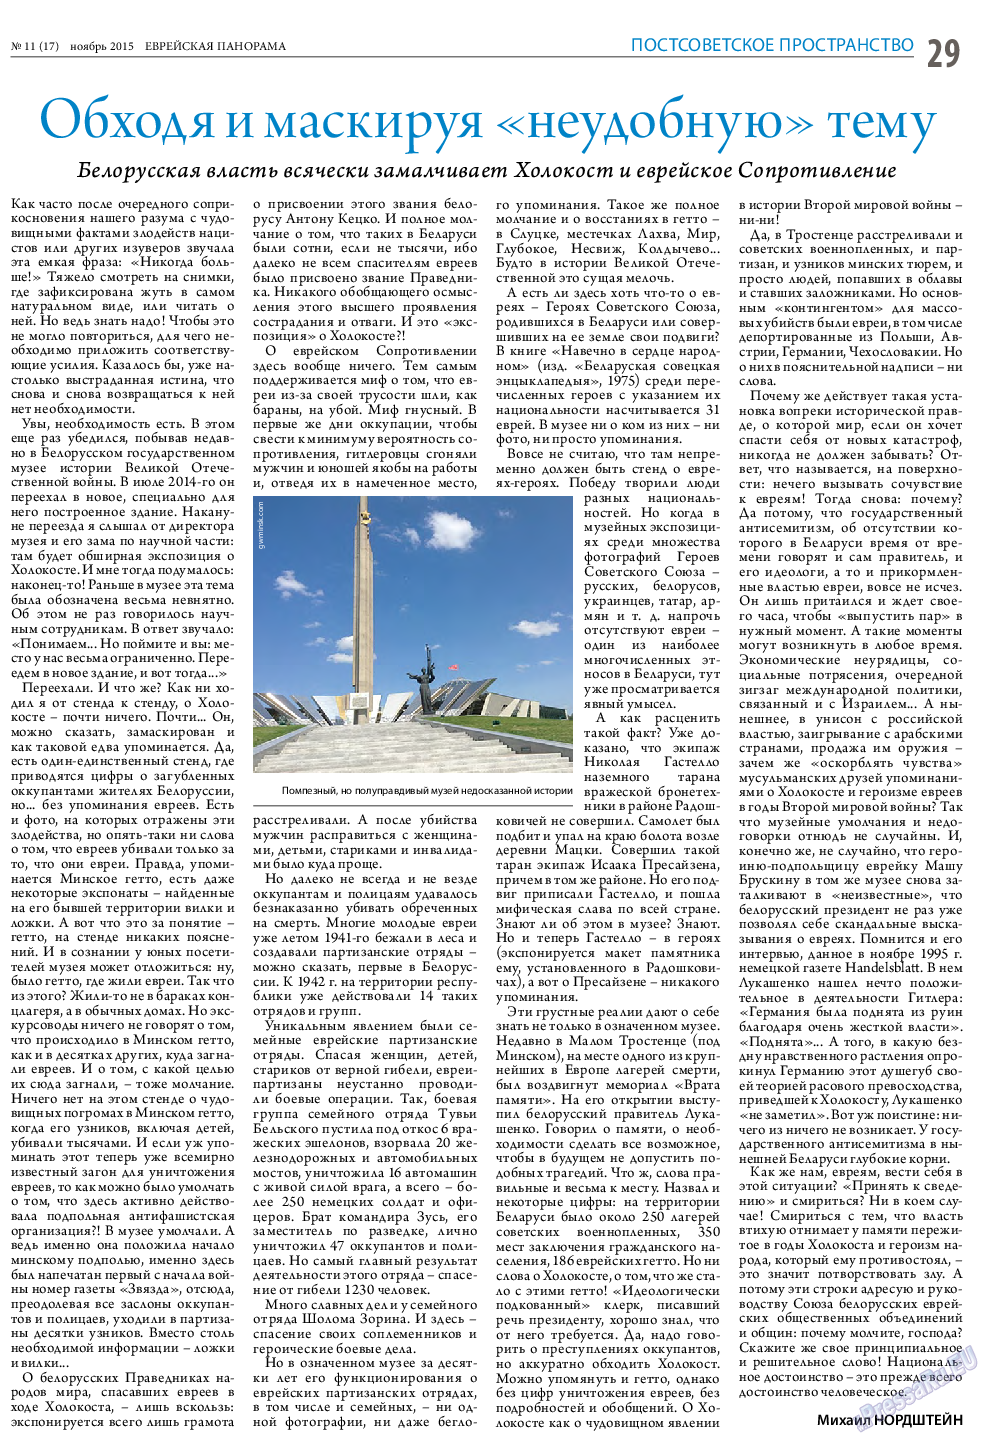 Еврейская панорама, газета. 2015 №11 стр.29